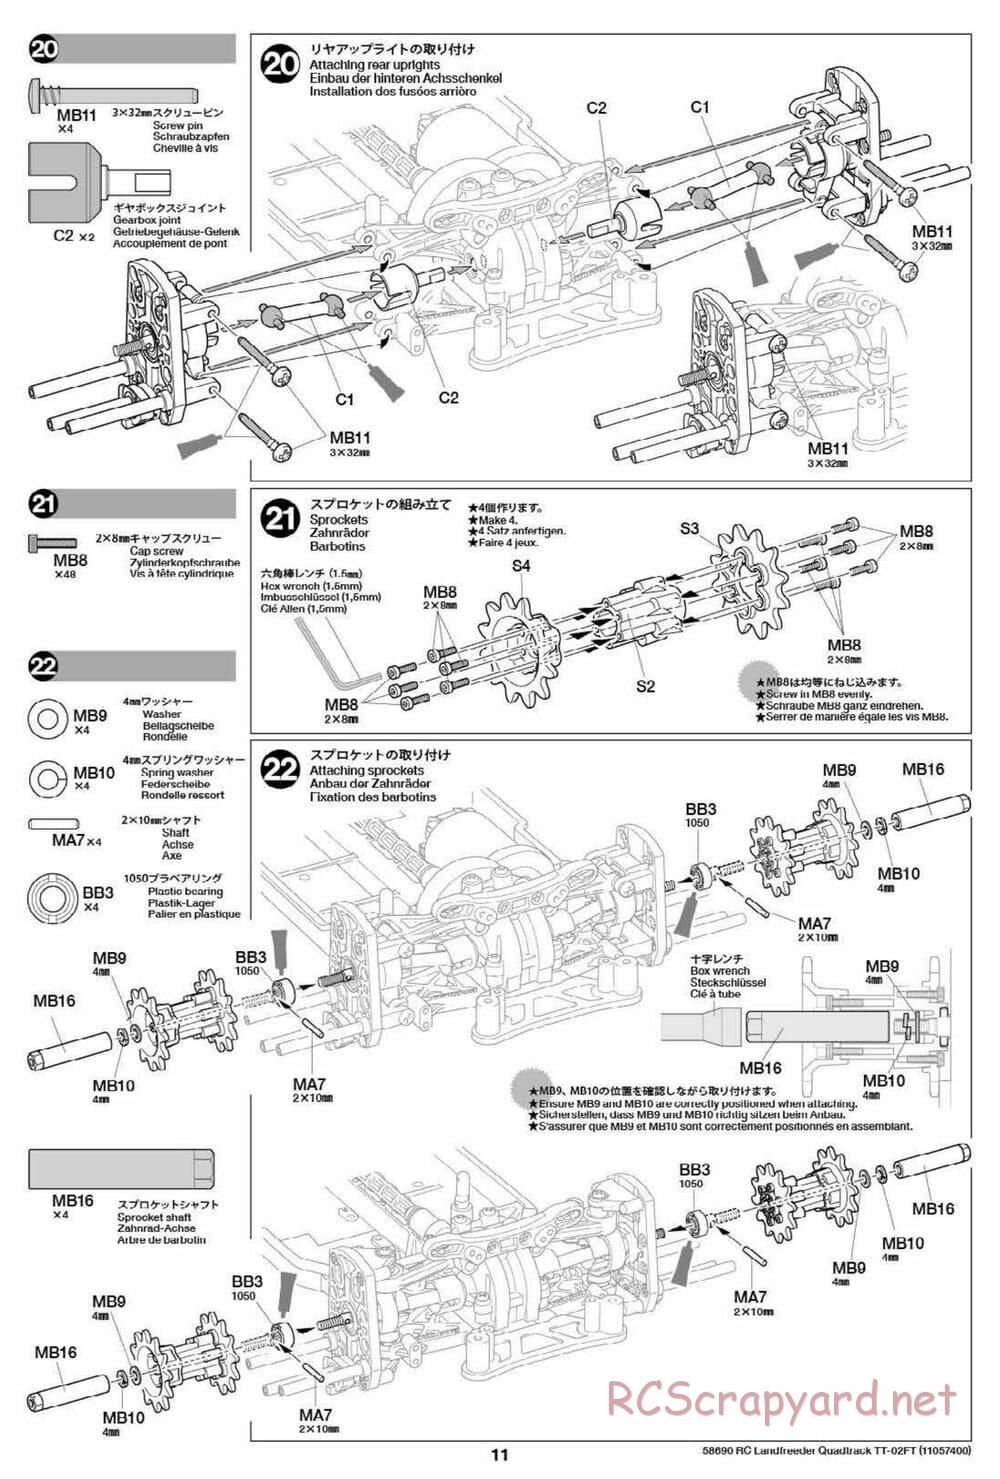 Tamiya - Landfreeder Quadtrack - TT-02FT Chassis - Manual - Page 11